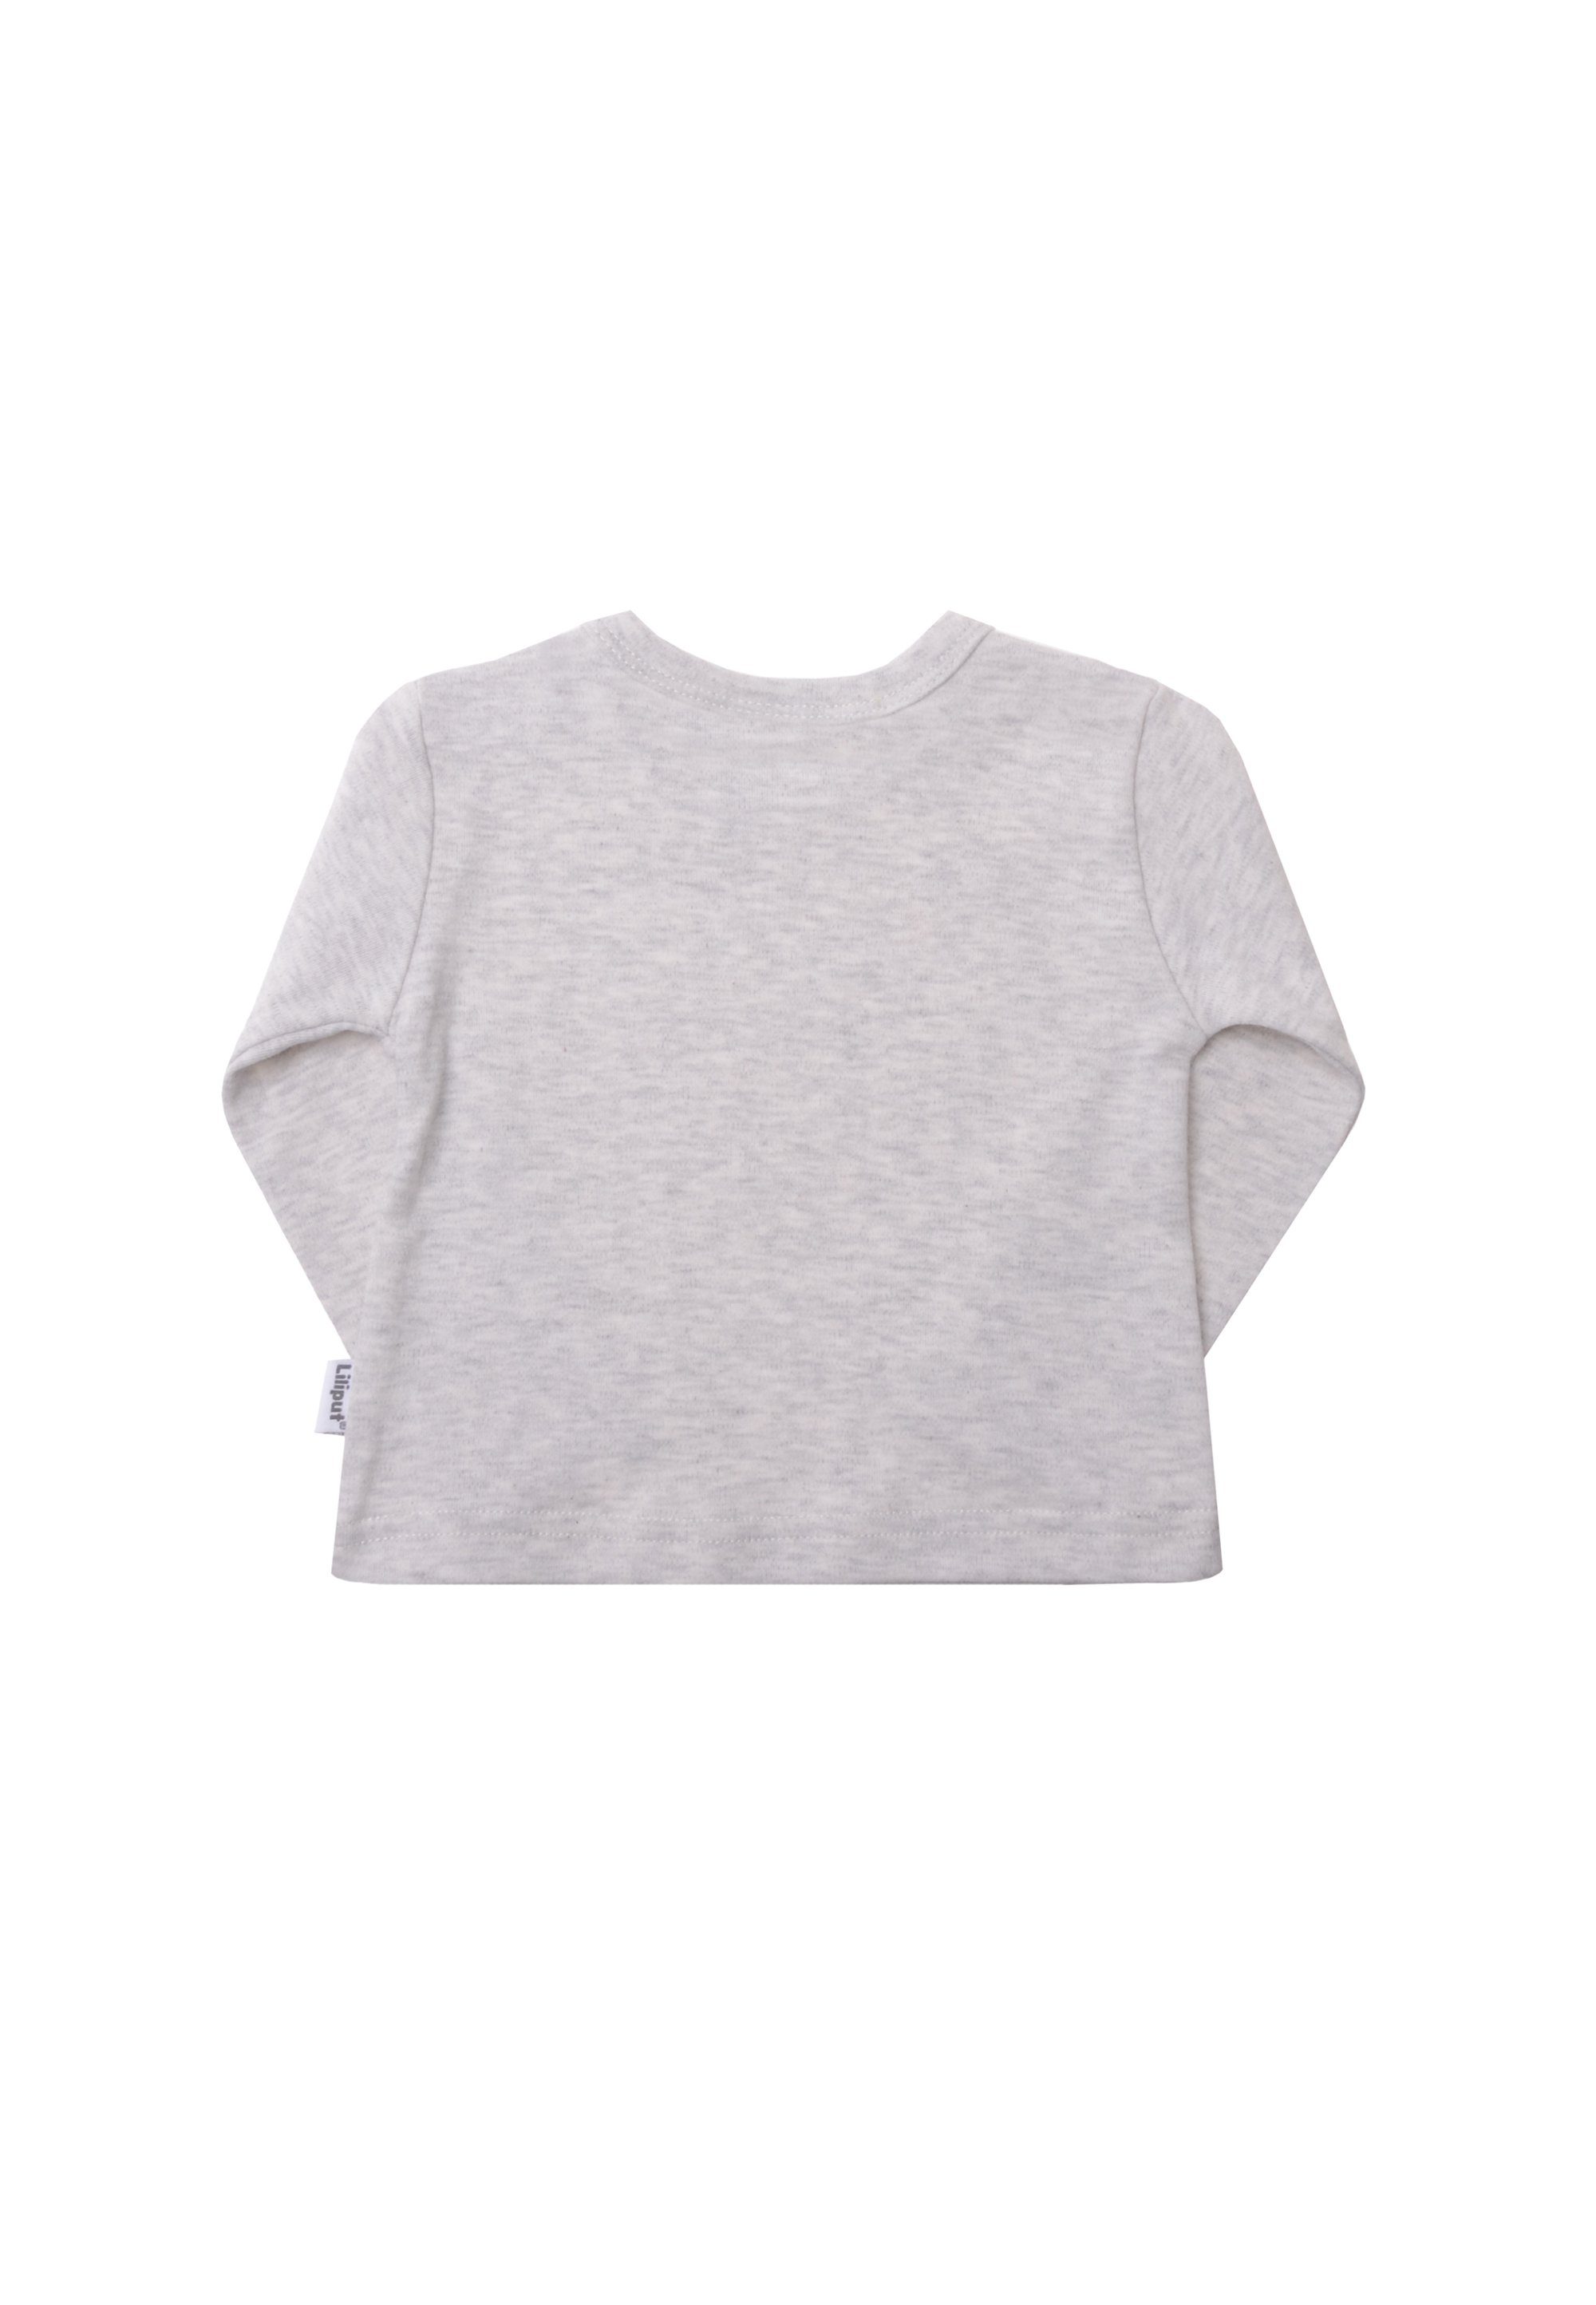 weichem Liliput T-Shirt Baumwoll-Material aus